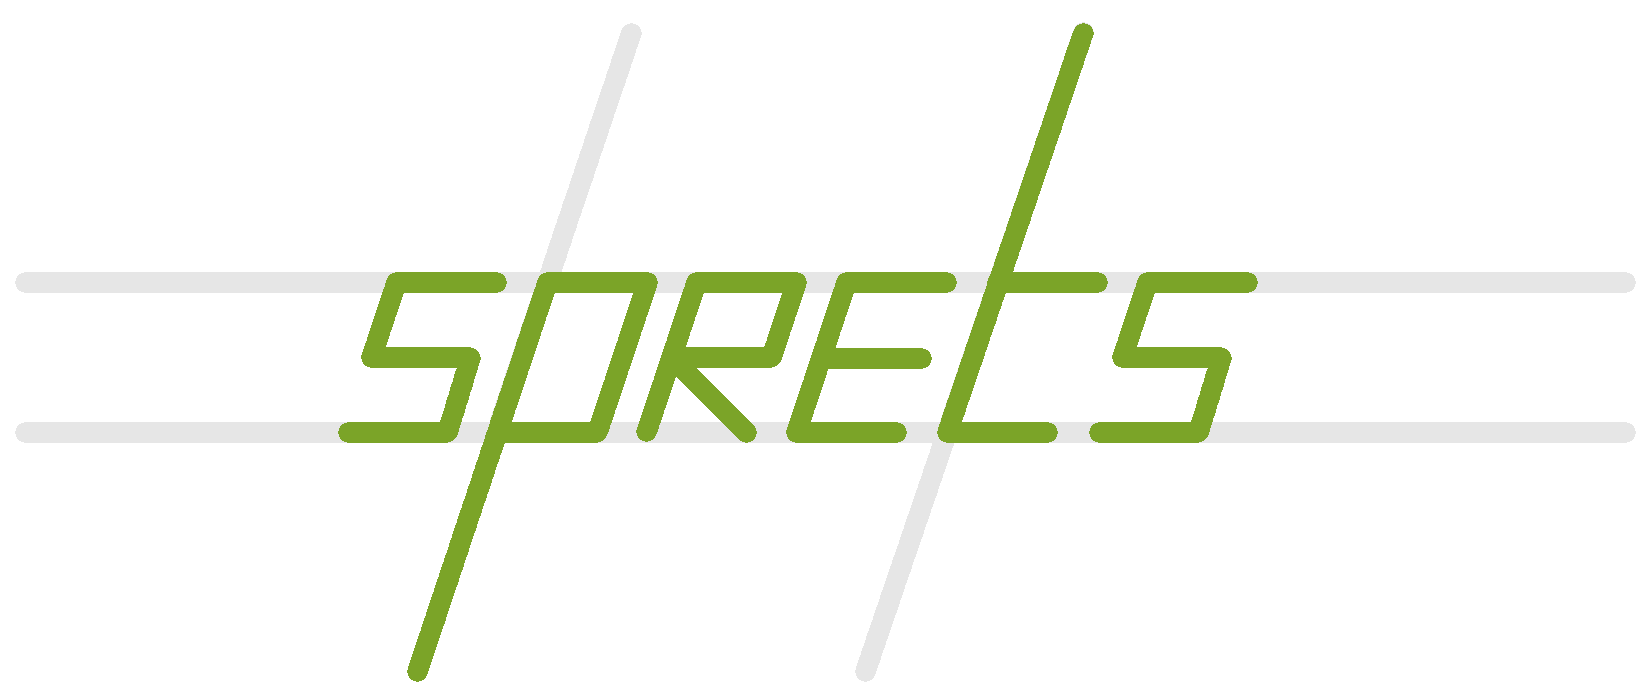 sprets logo